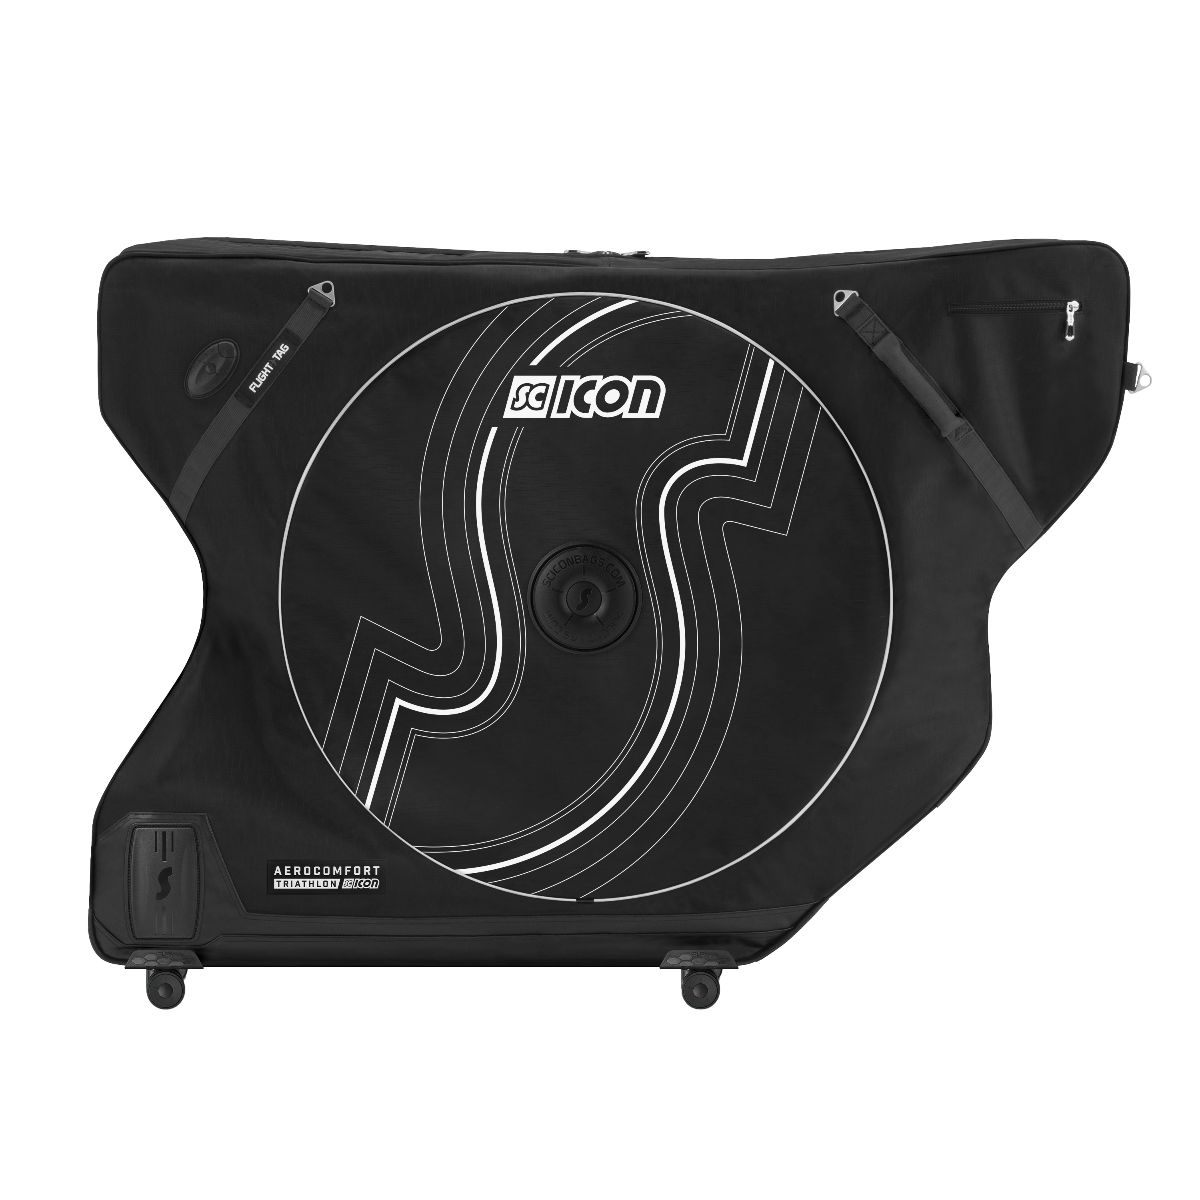 0-aerocomfort-triathlon-bike-travel-bag